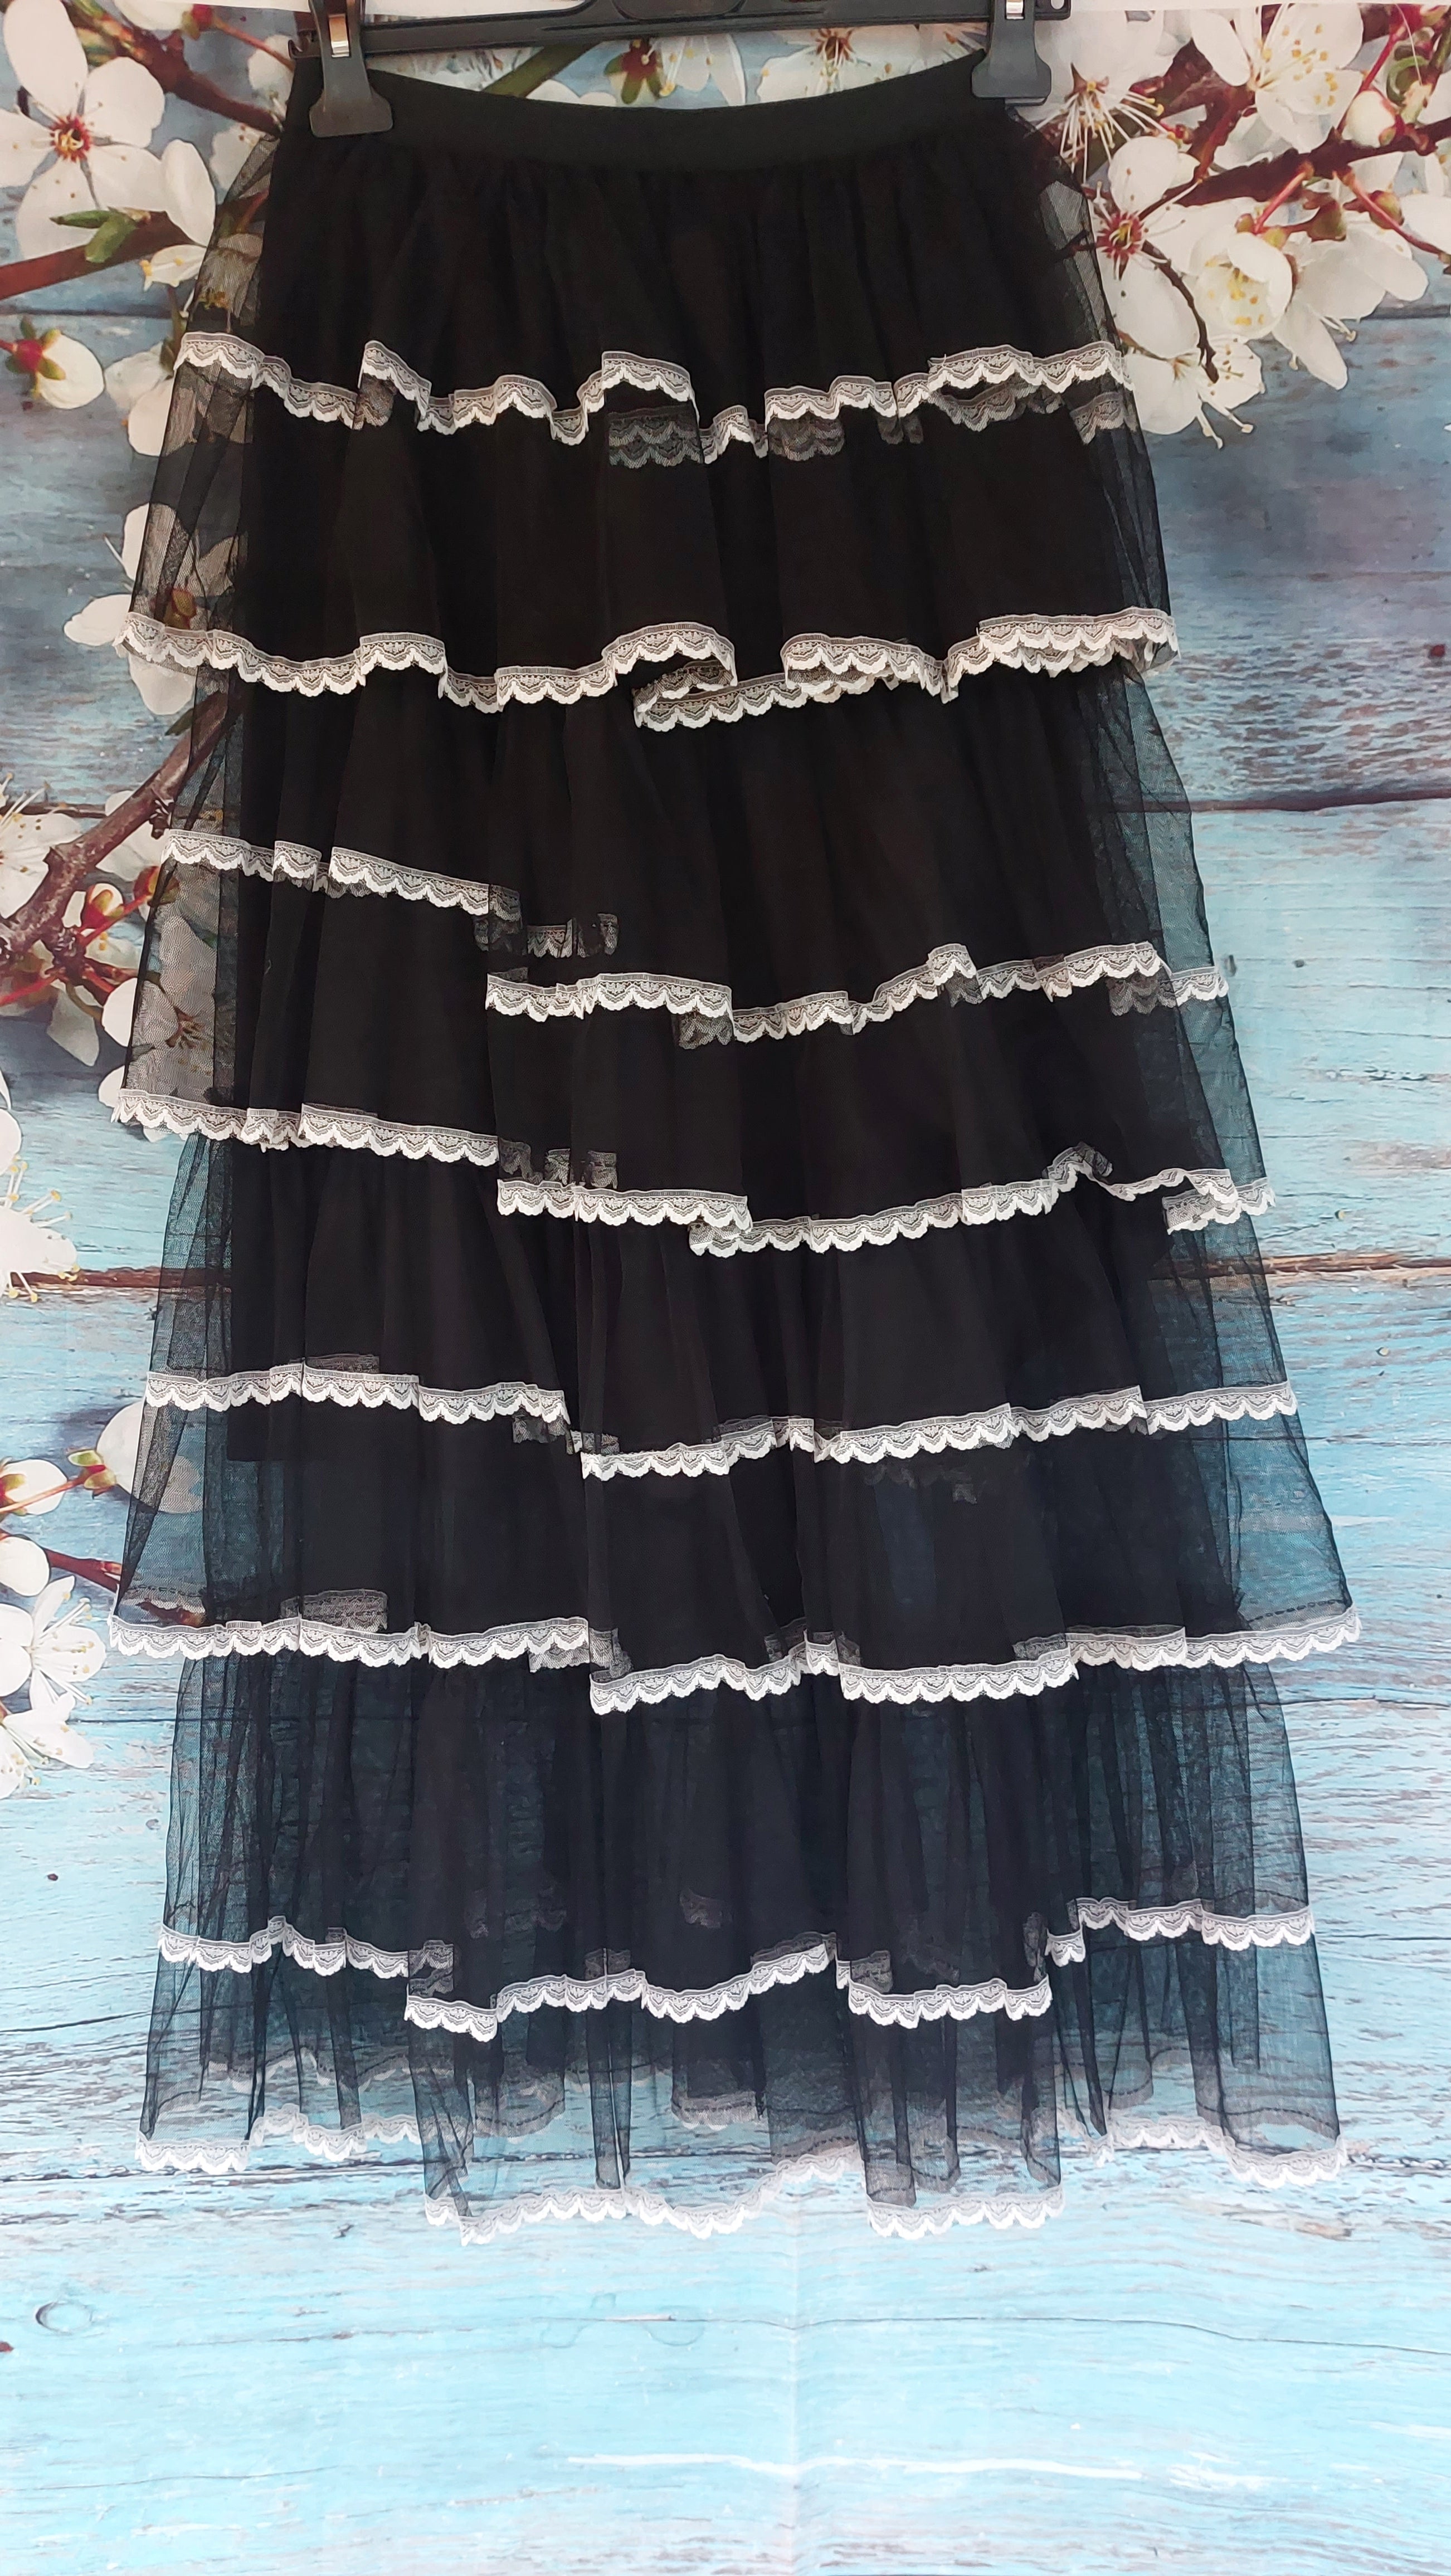 Trendy mesh skirts